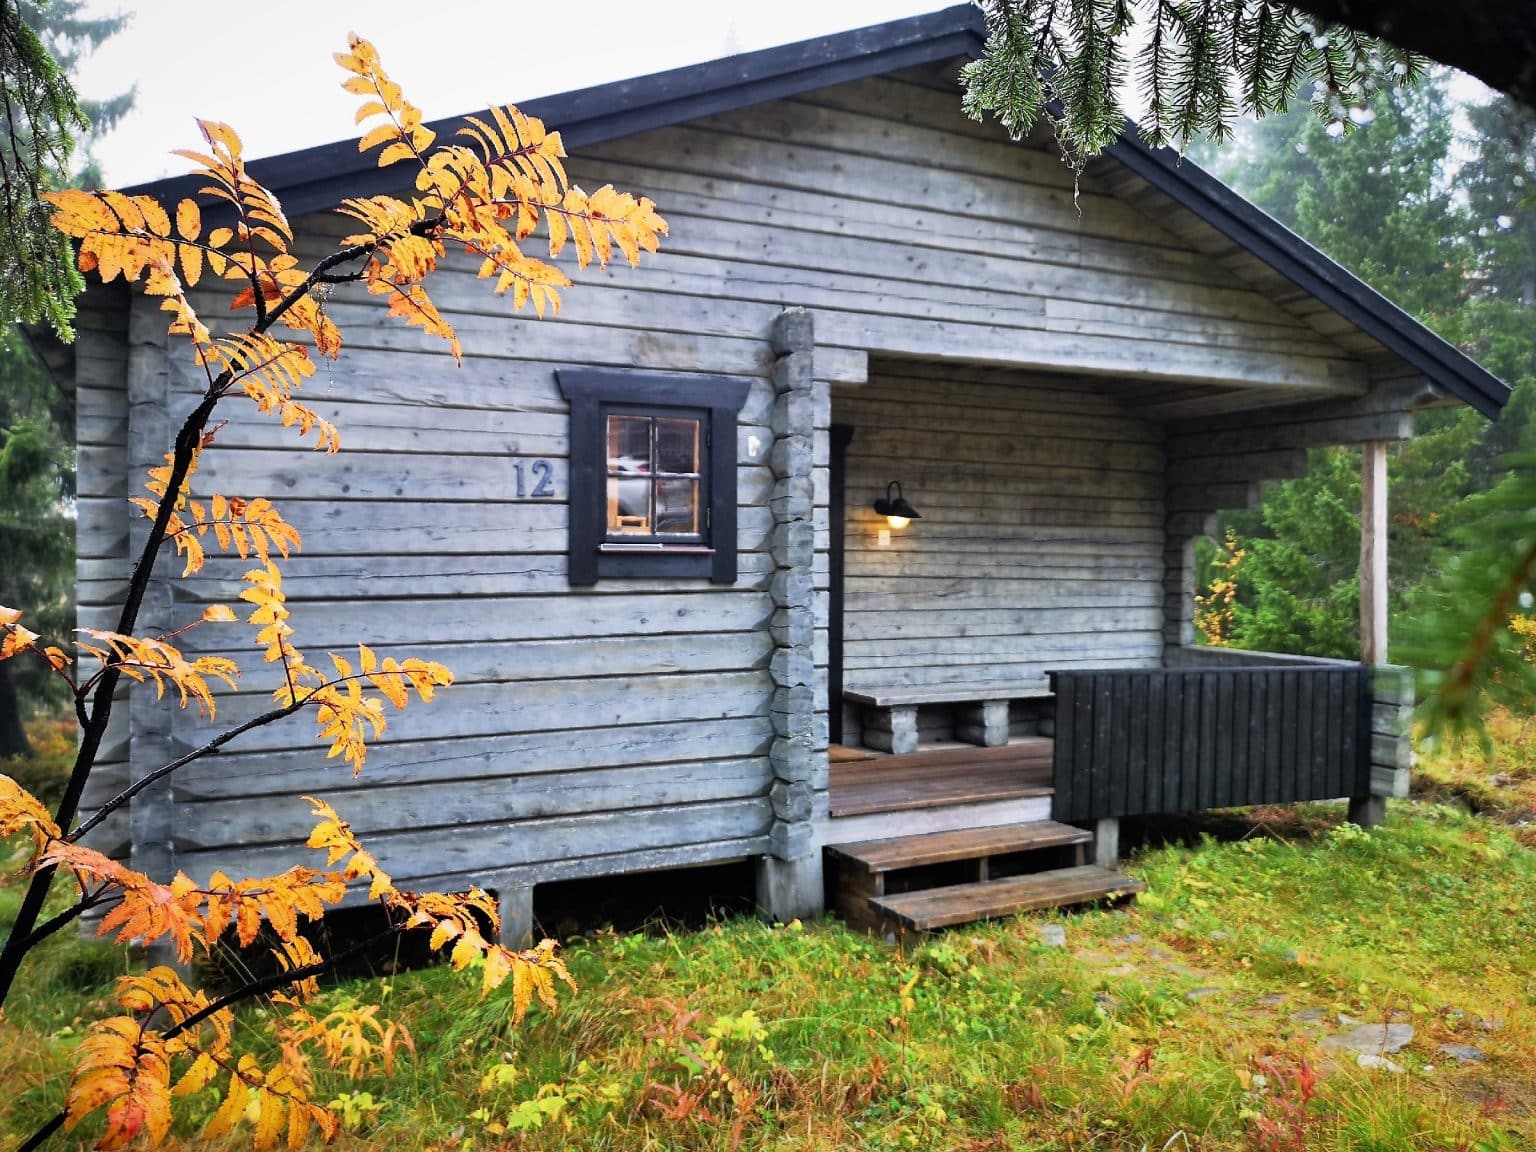 Mountain cottage in autumn garb